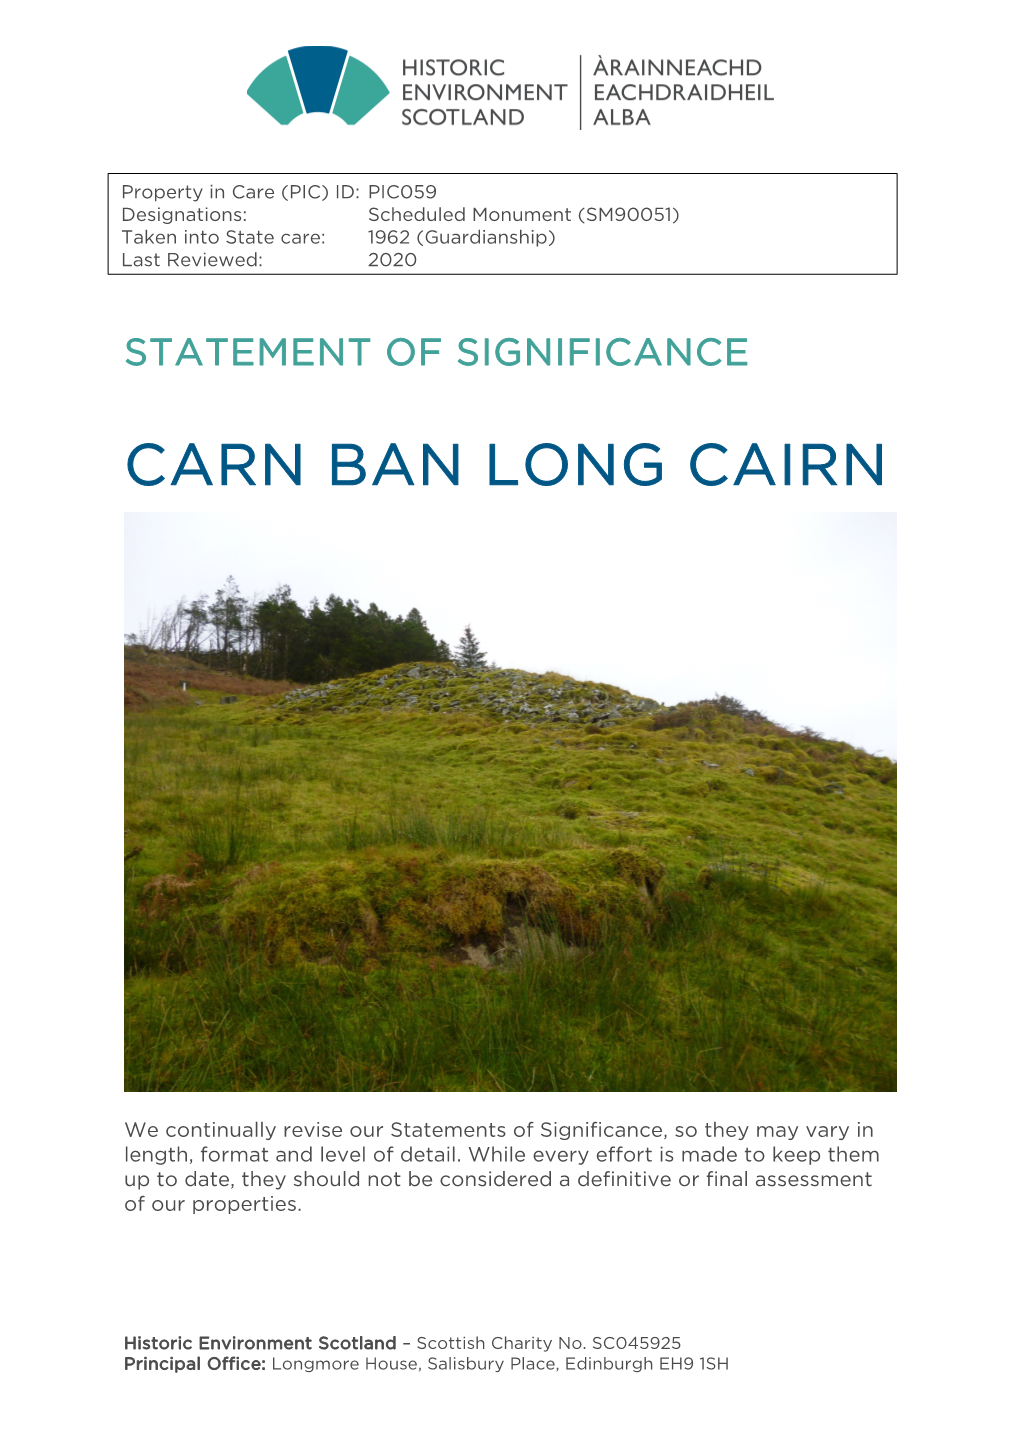 Carn Ban Long Cairn